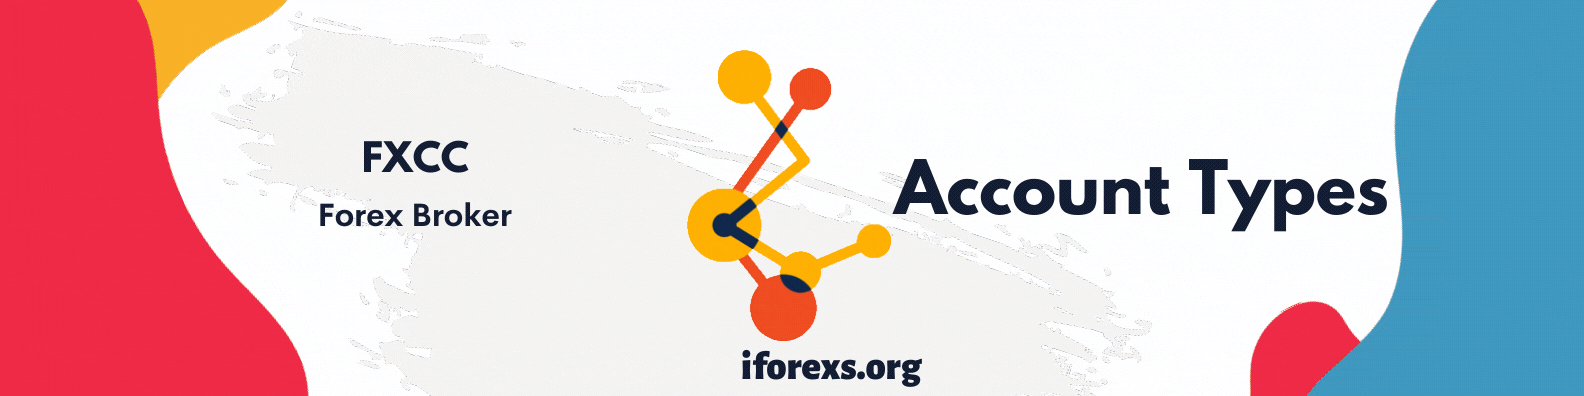 FXCC Venue Account Types